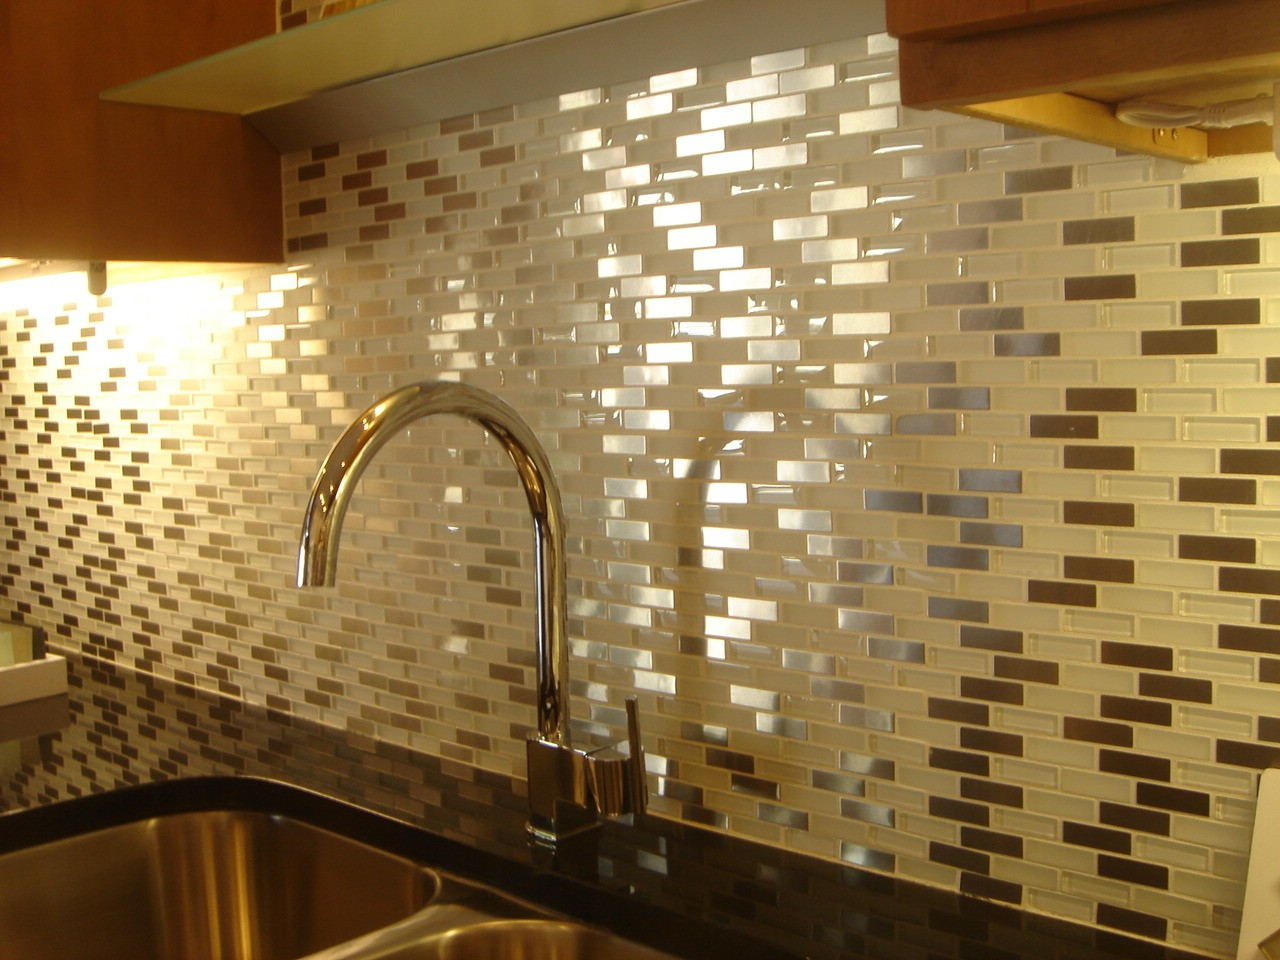 Kitchen Wall Tiles Design Ideas
 ceramic kitchen wall tiles ideas Home Decor Ideas